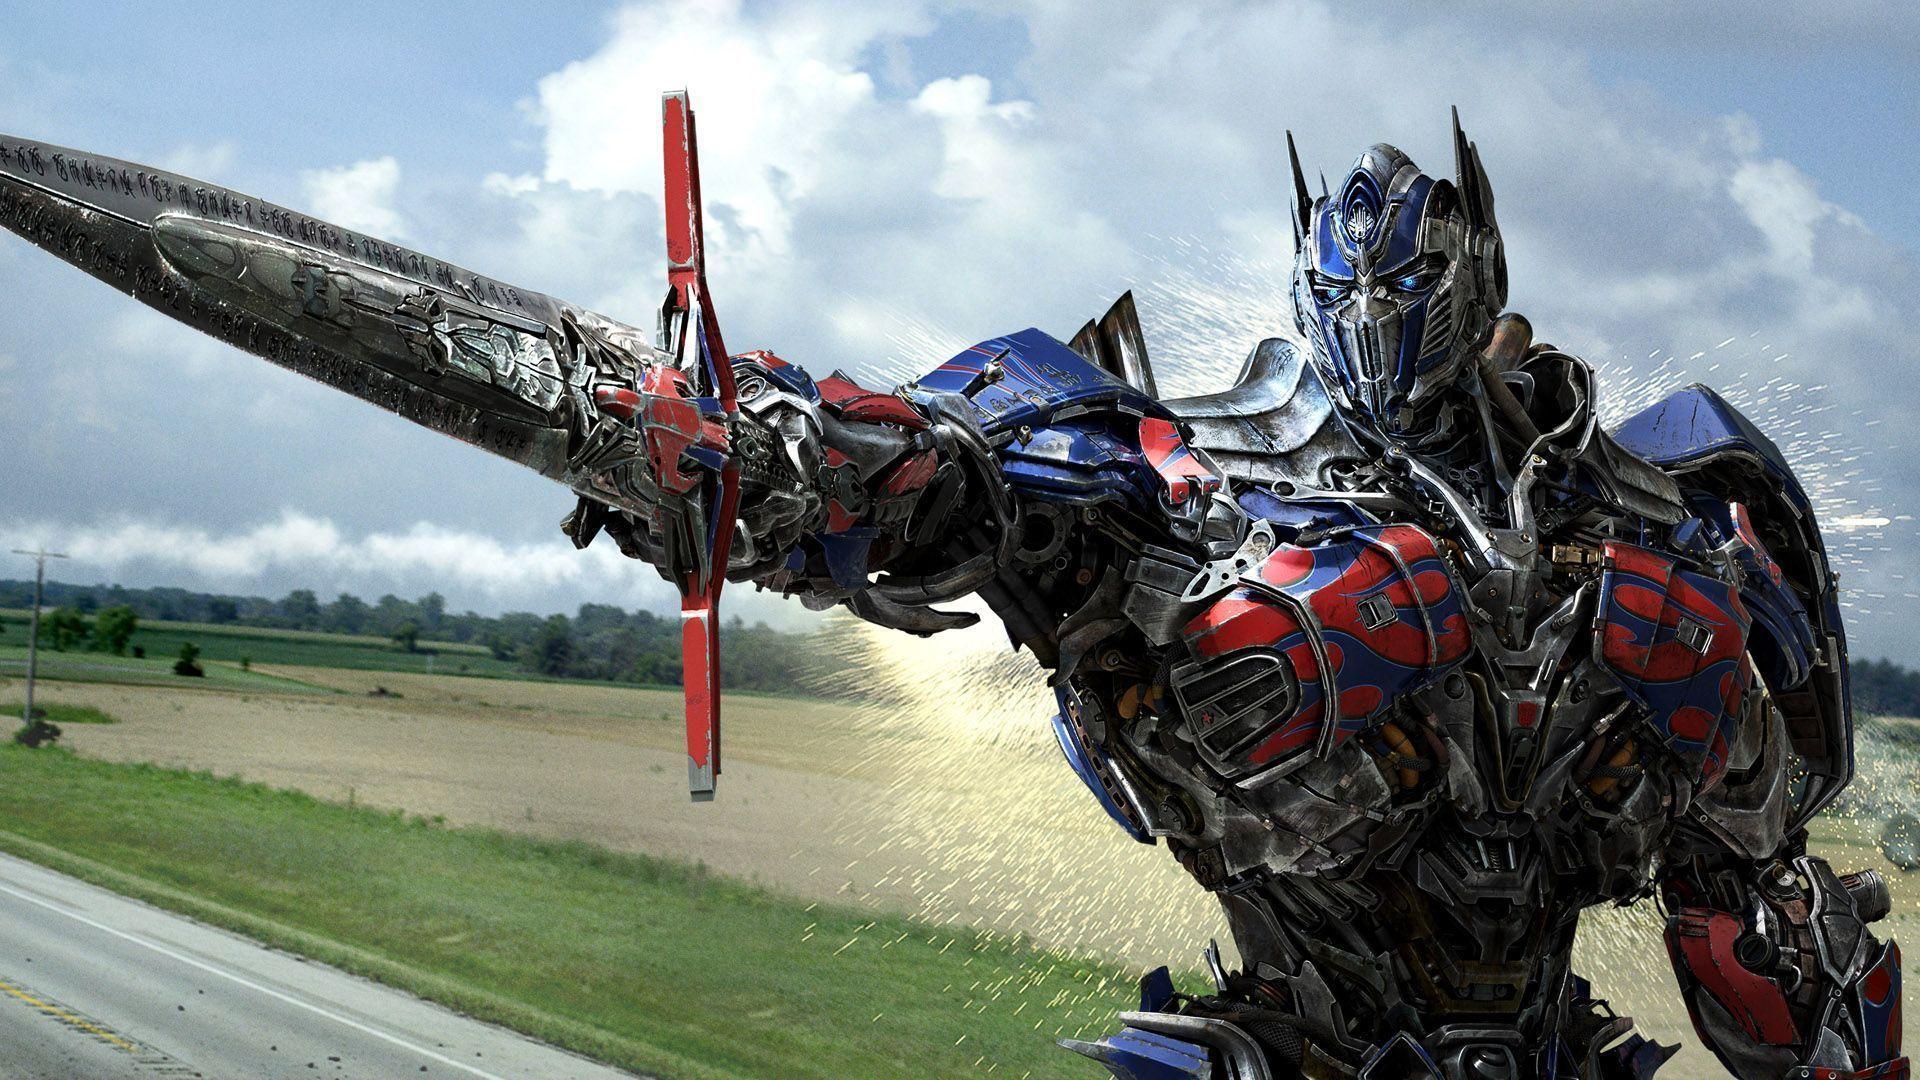 Optimus Prime Sword Close Up In Transformers 4 Wallpaper Wide or